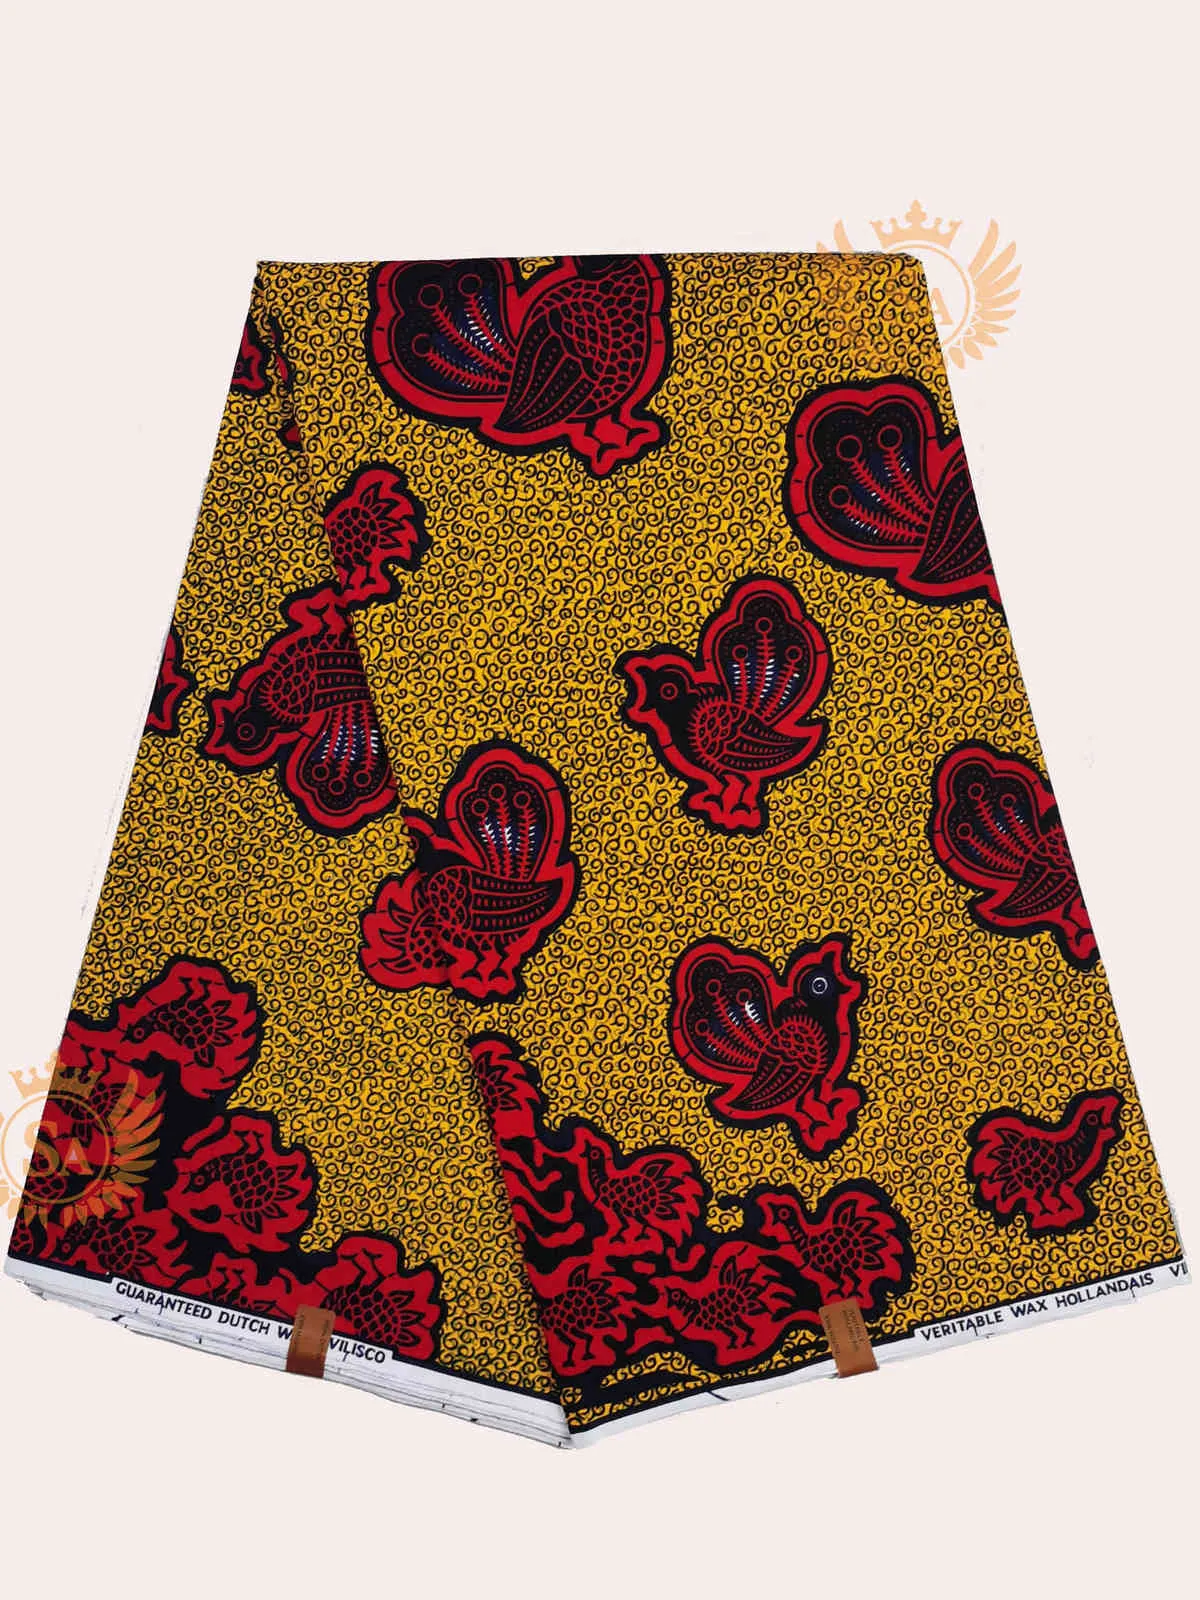 Veritable Wax d Real wax print fabric dutch hollandais pagne africa Dress Cotton 02 210702272R